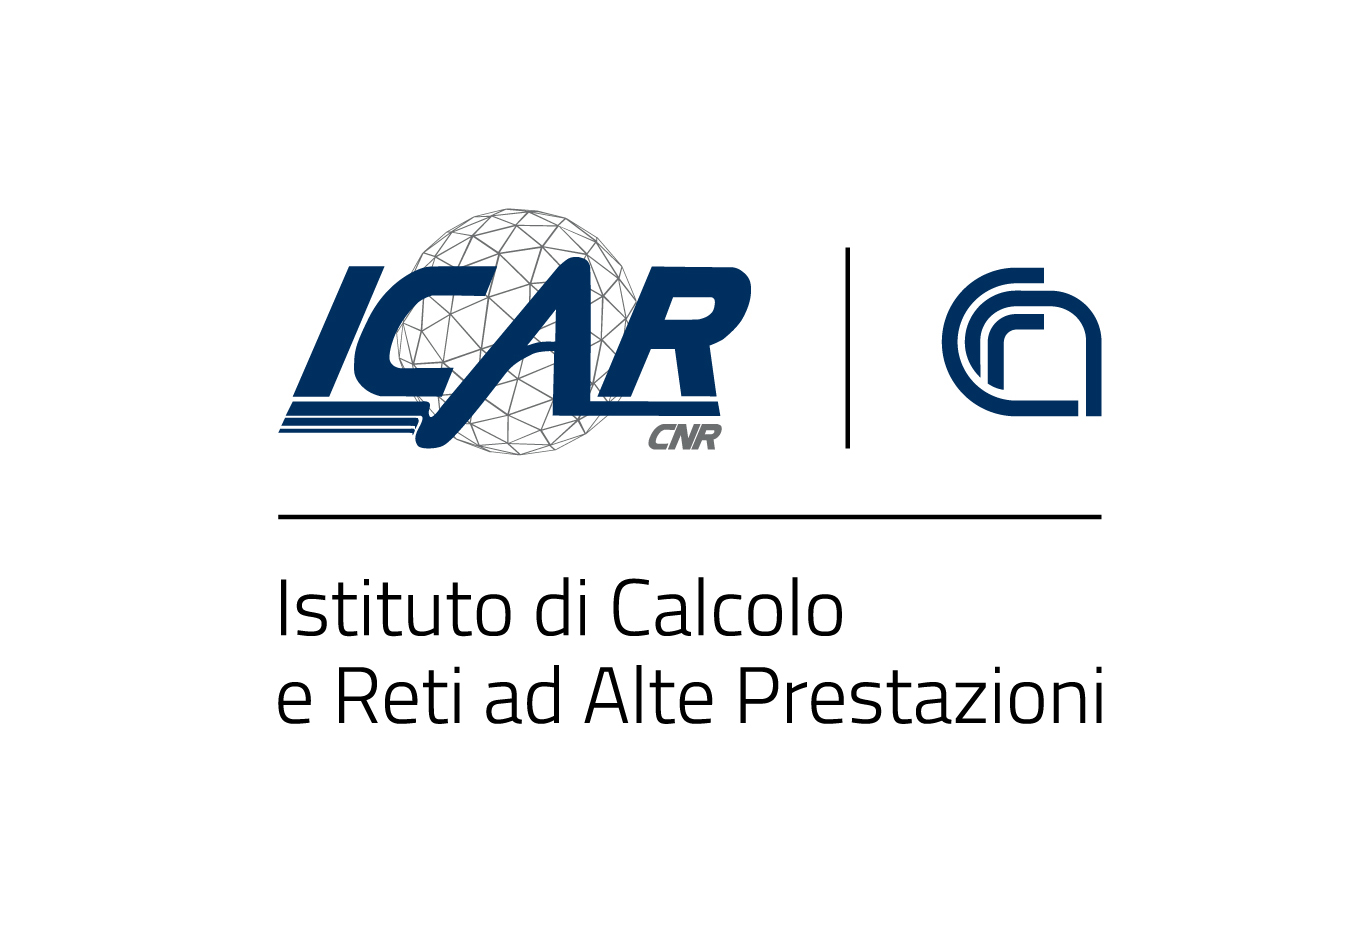 CNR-ICAR Logo